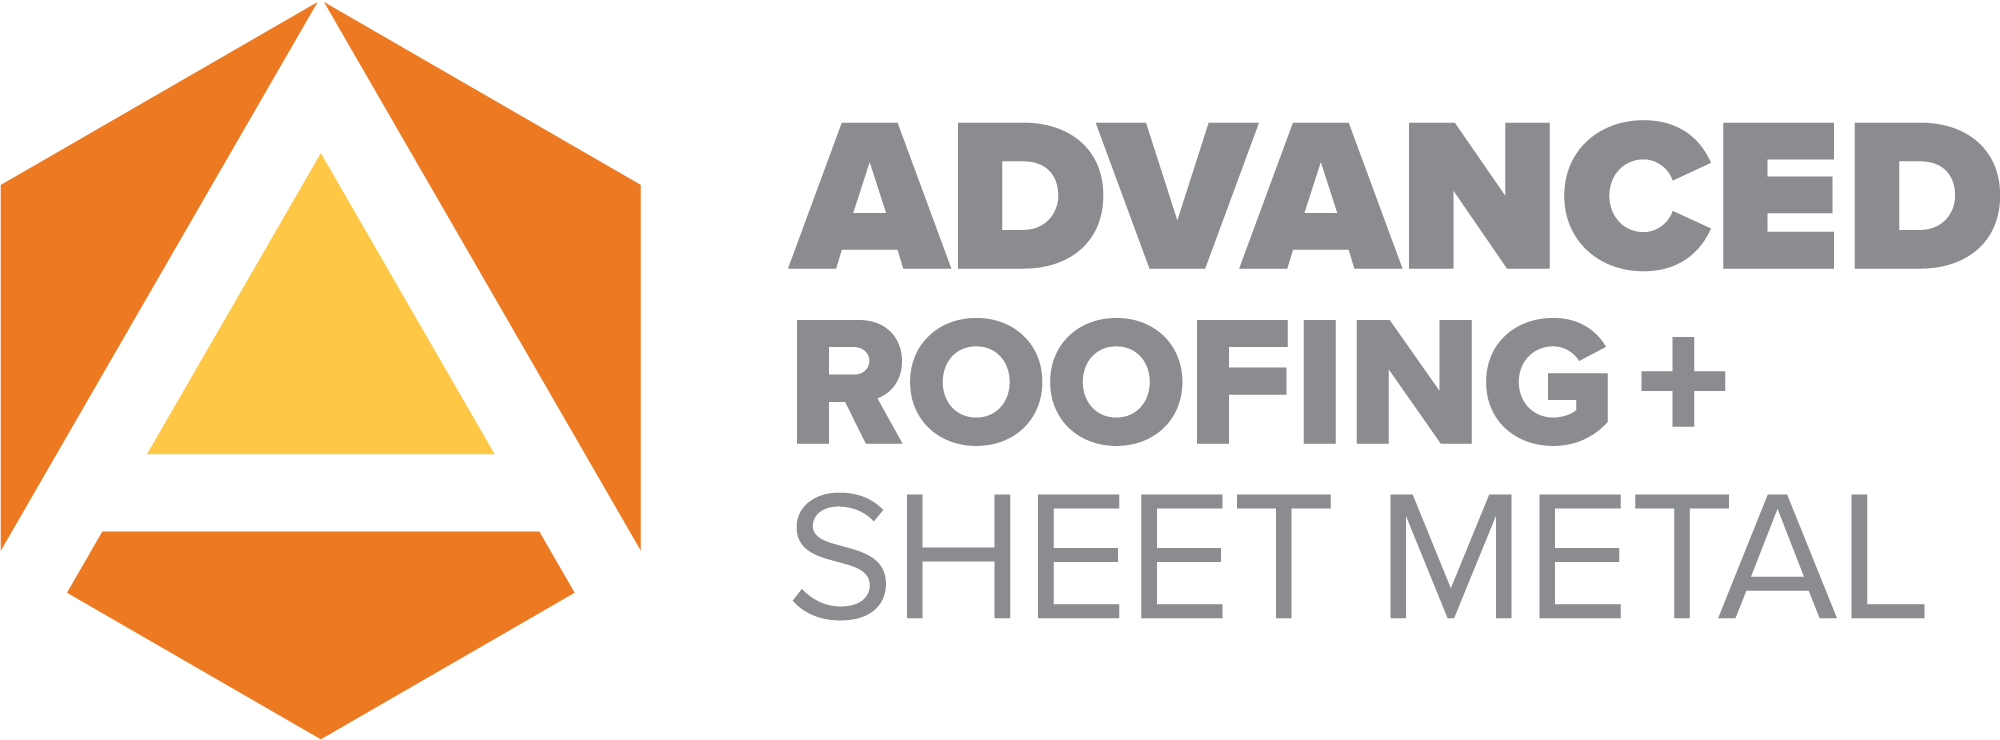 Advanced Roofing and Sheetmetal Florida